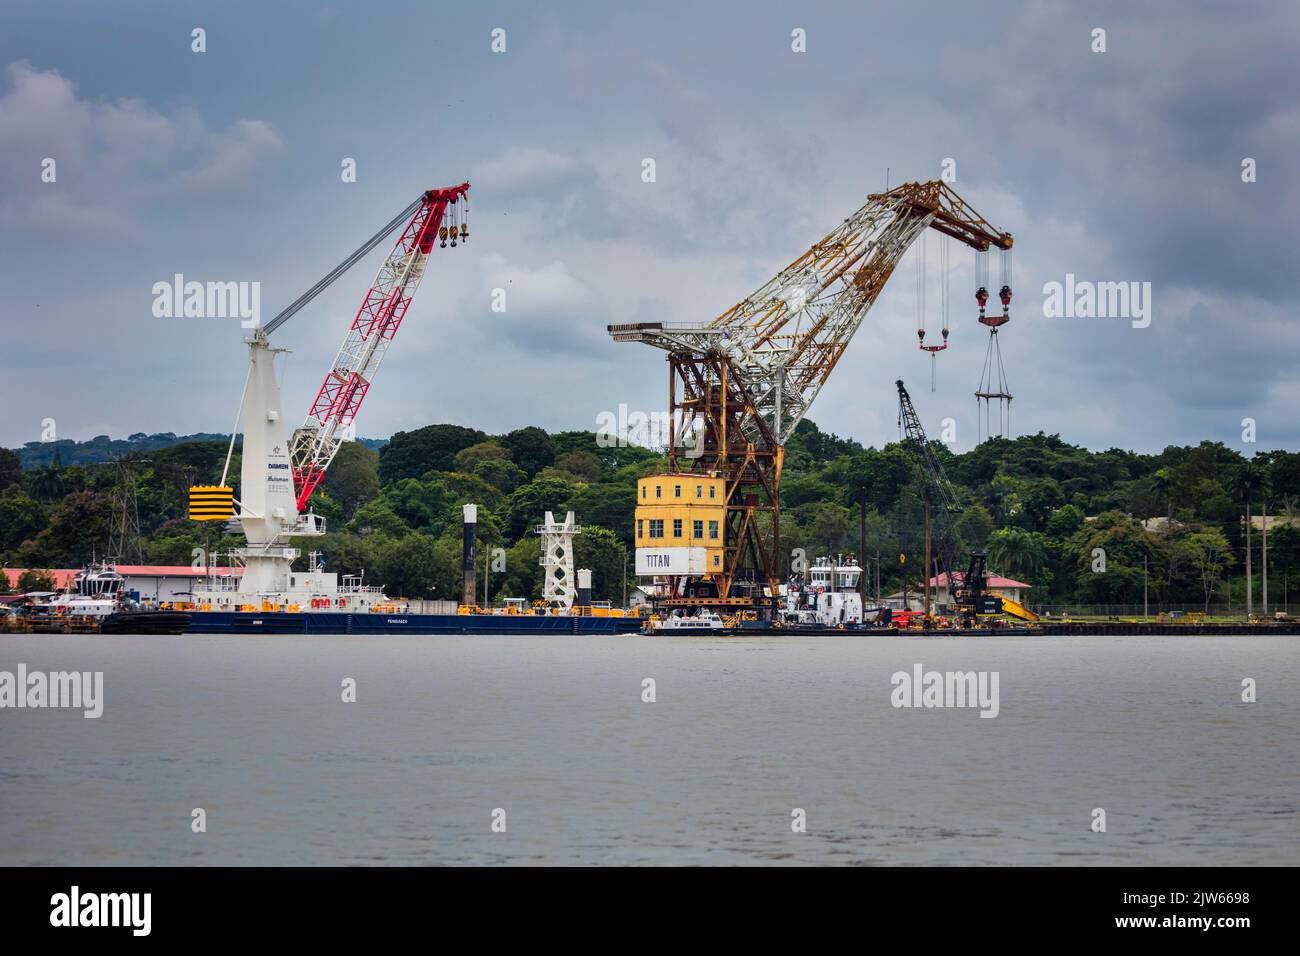 Large cranes at the Gamboa dock, Panama Canal, Colon province, Republic of Panama, Central America. Stock Photo